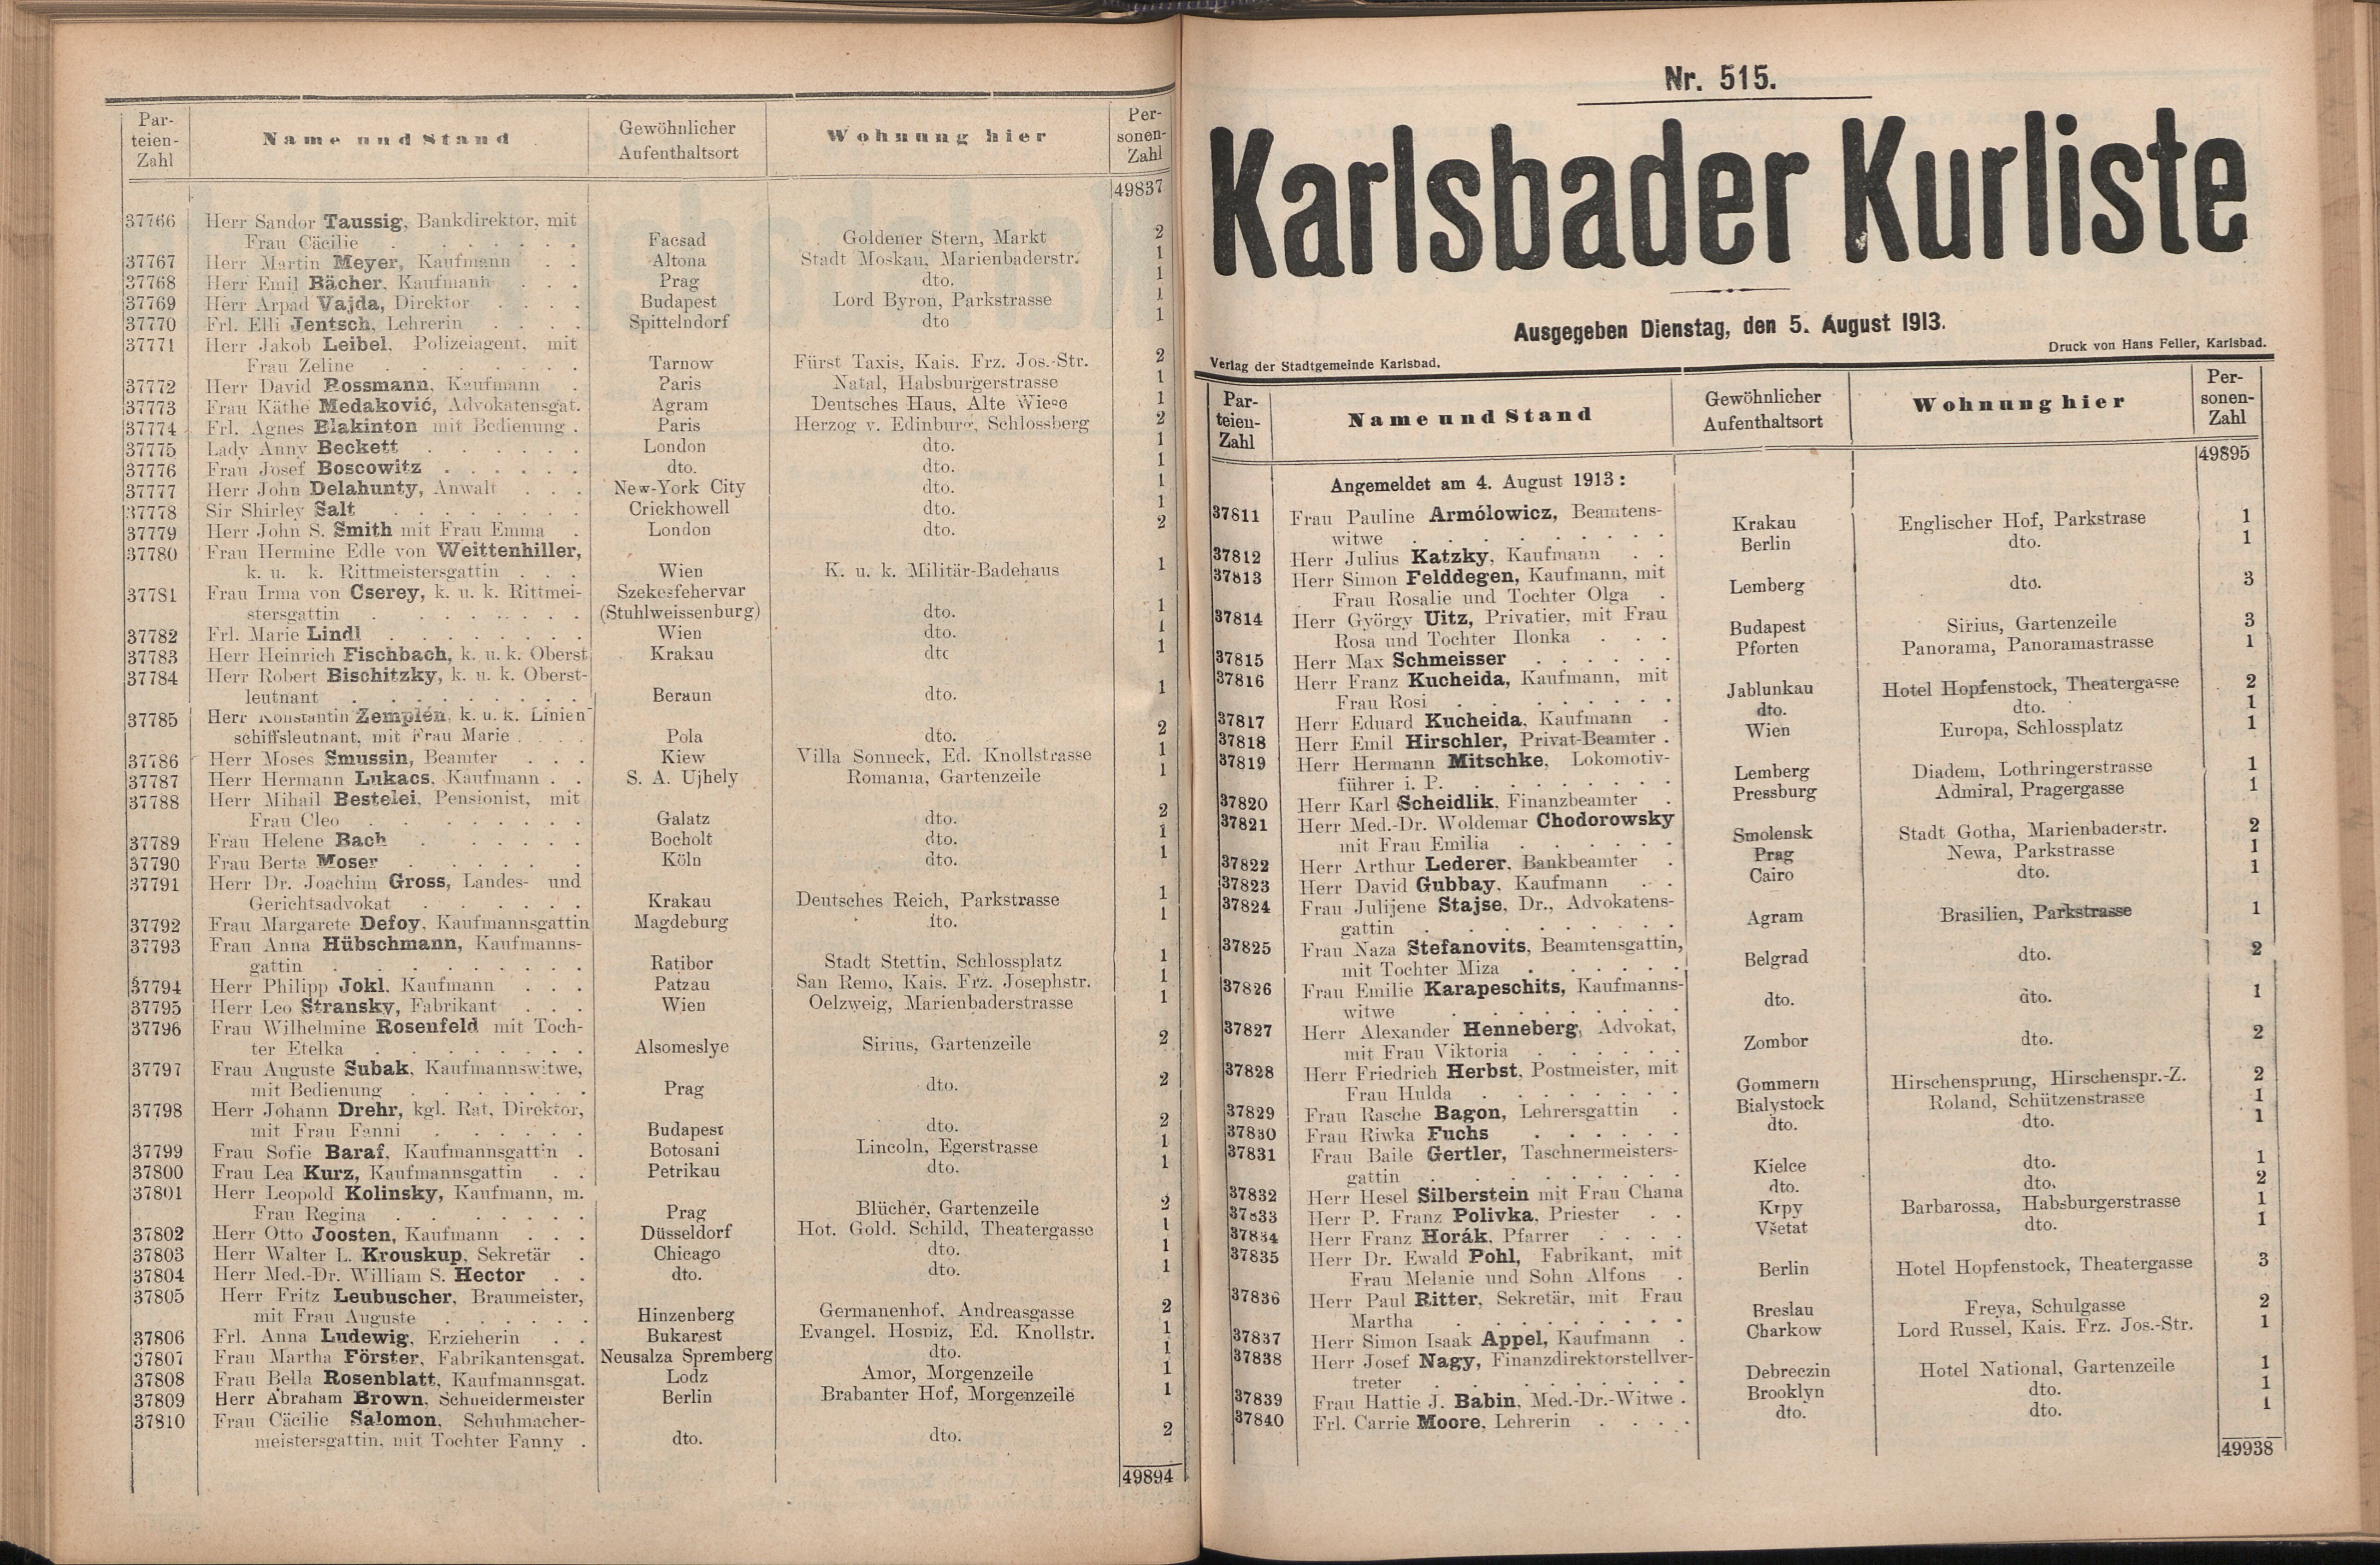 251. soap-kv_knihovna_karlsbader-kurliste-1913-2_2510